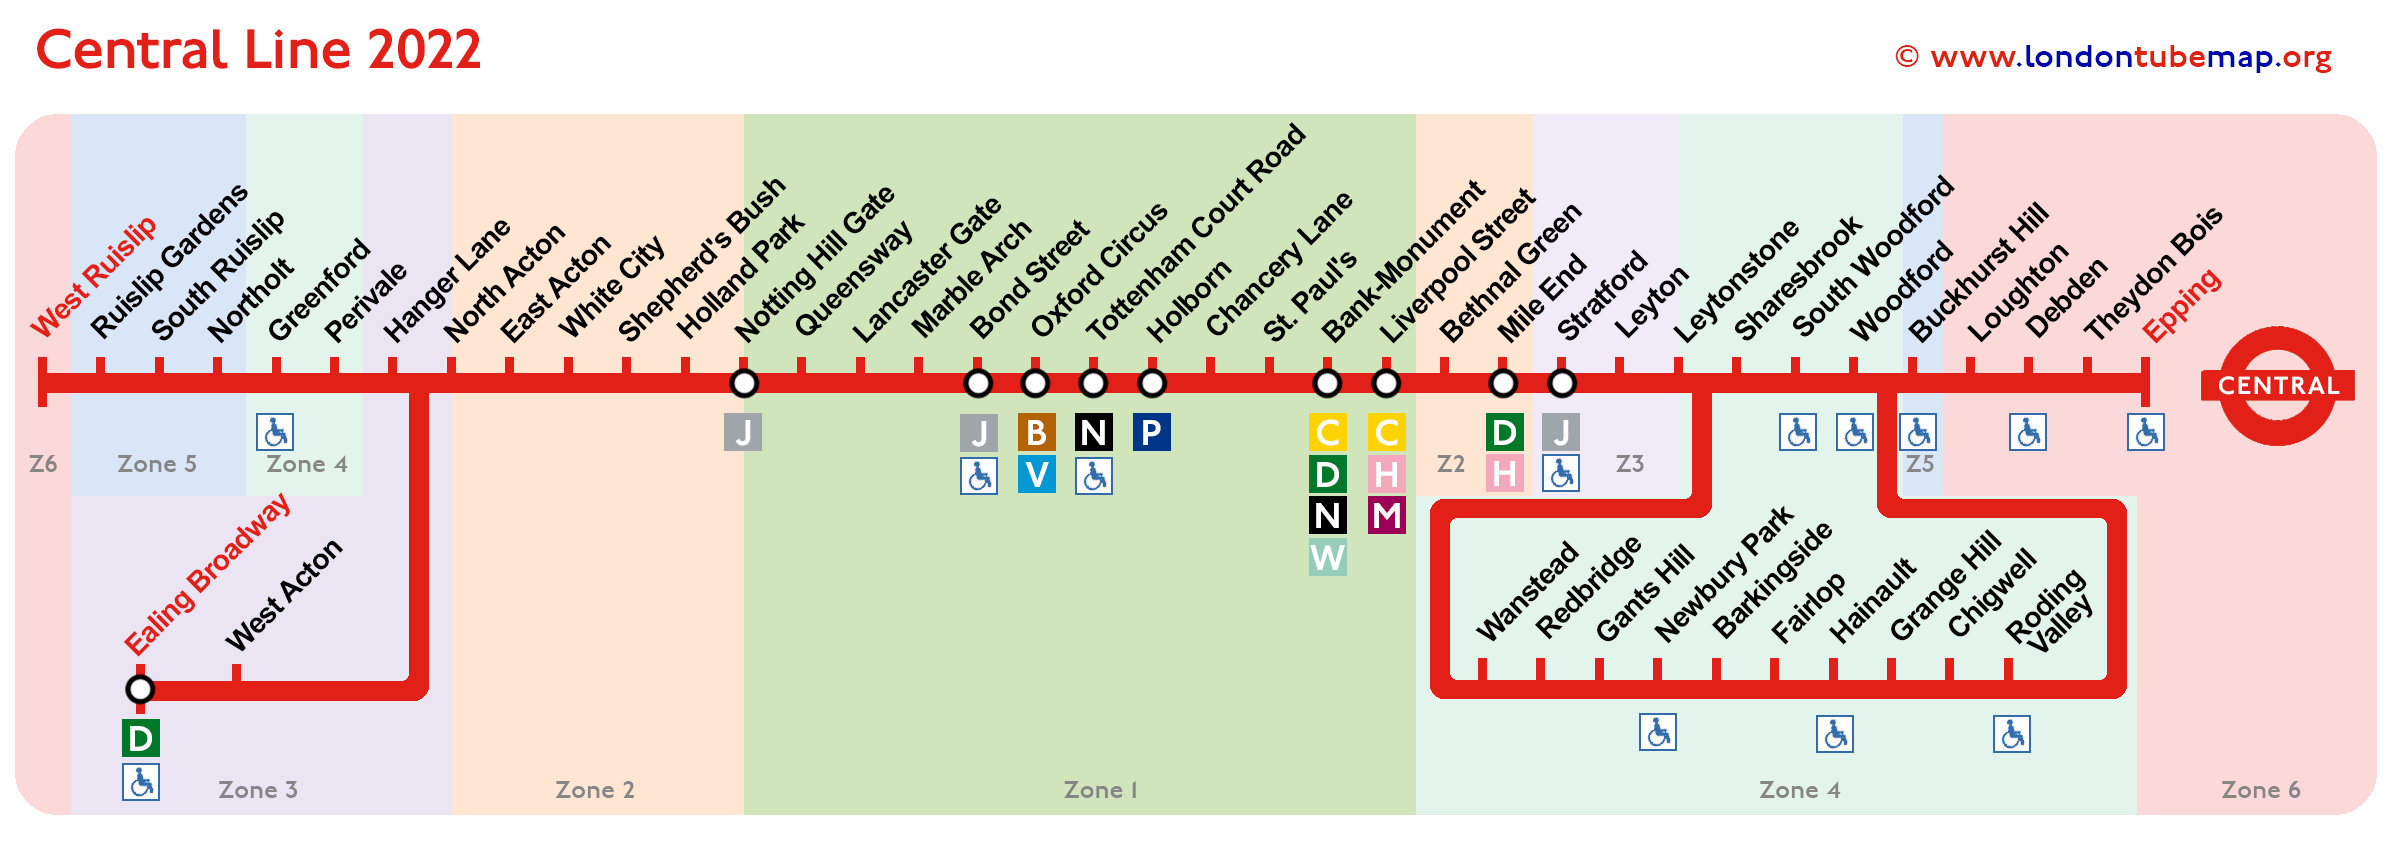 Central line 2022